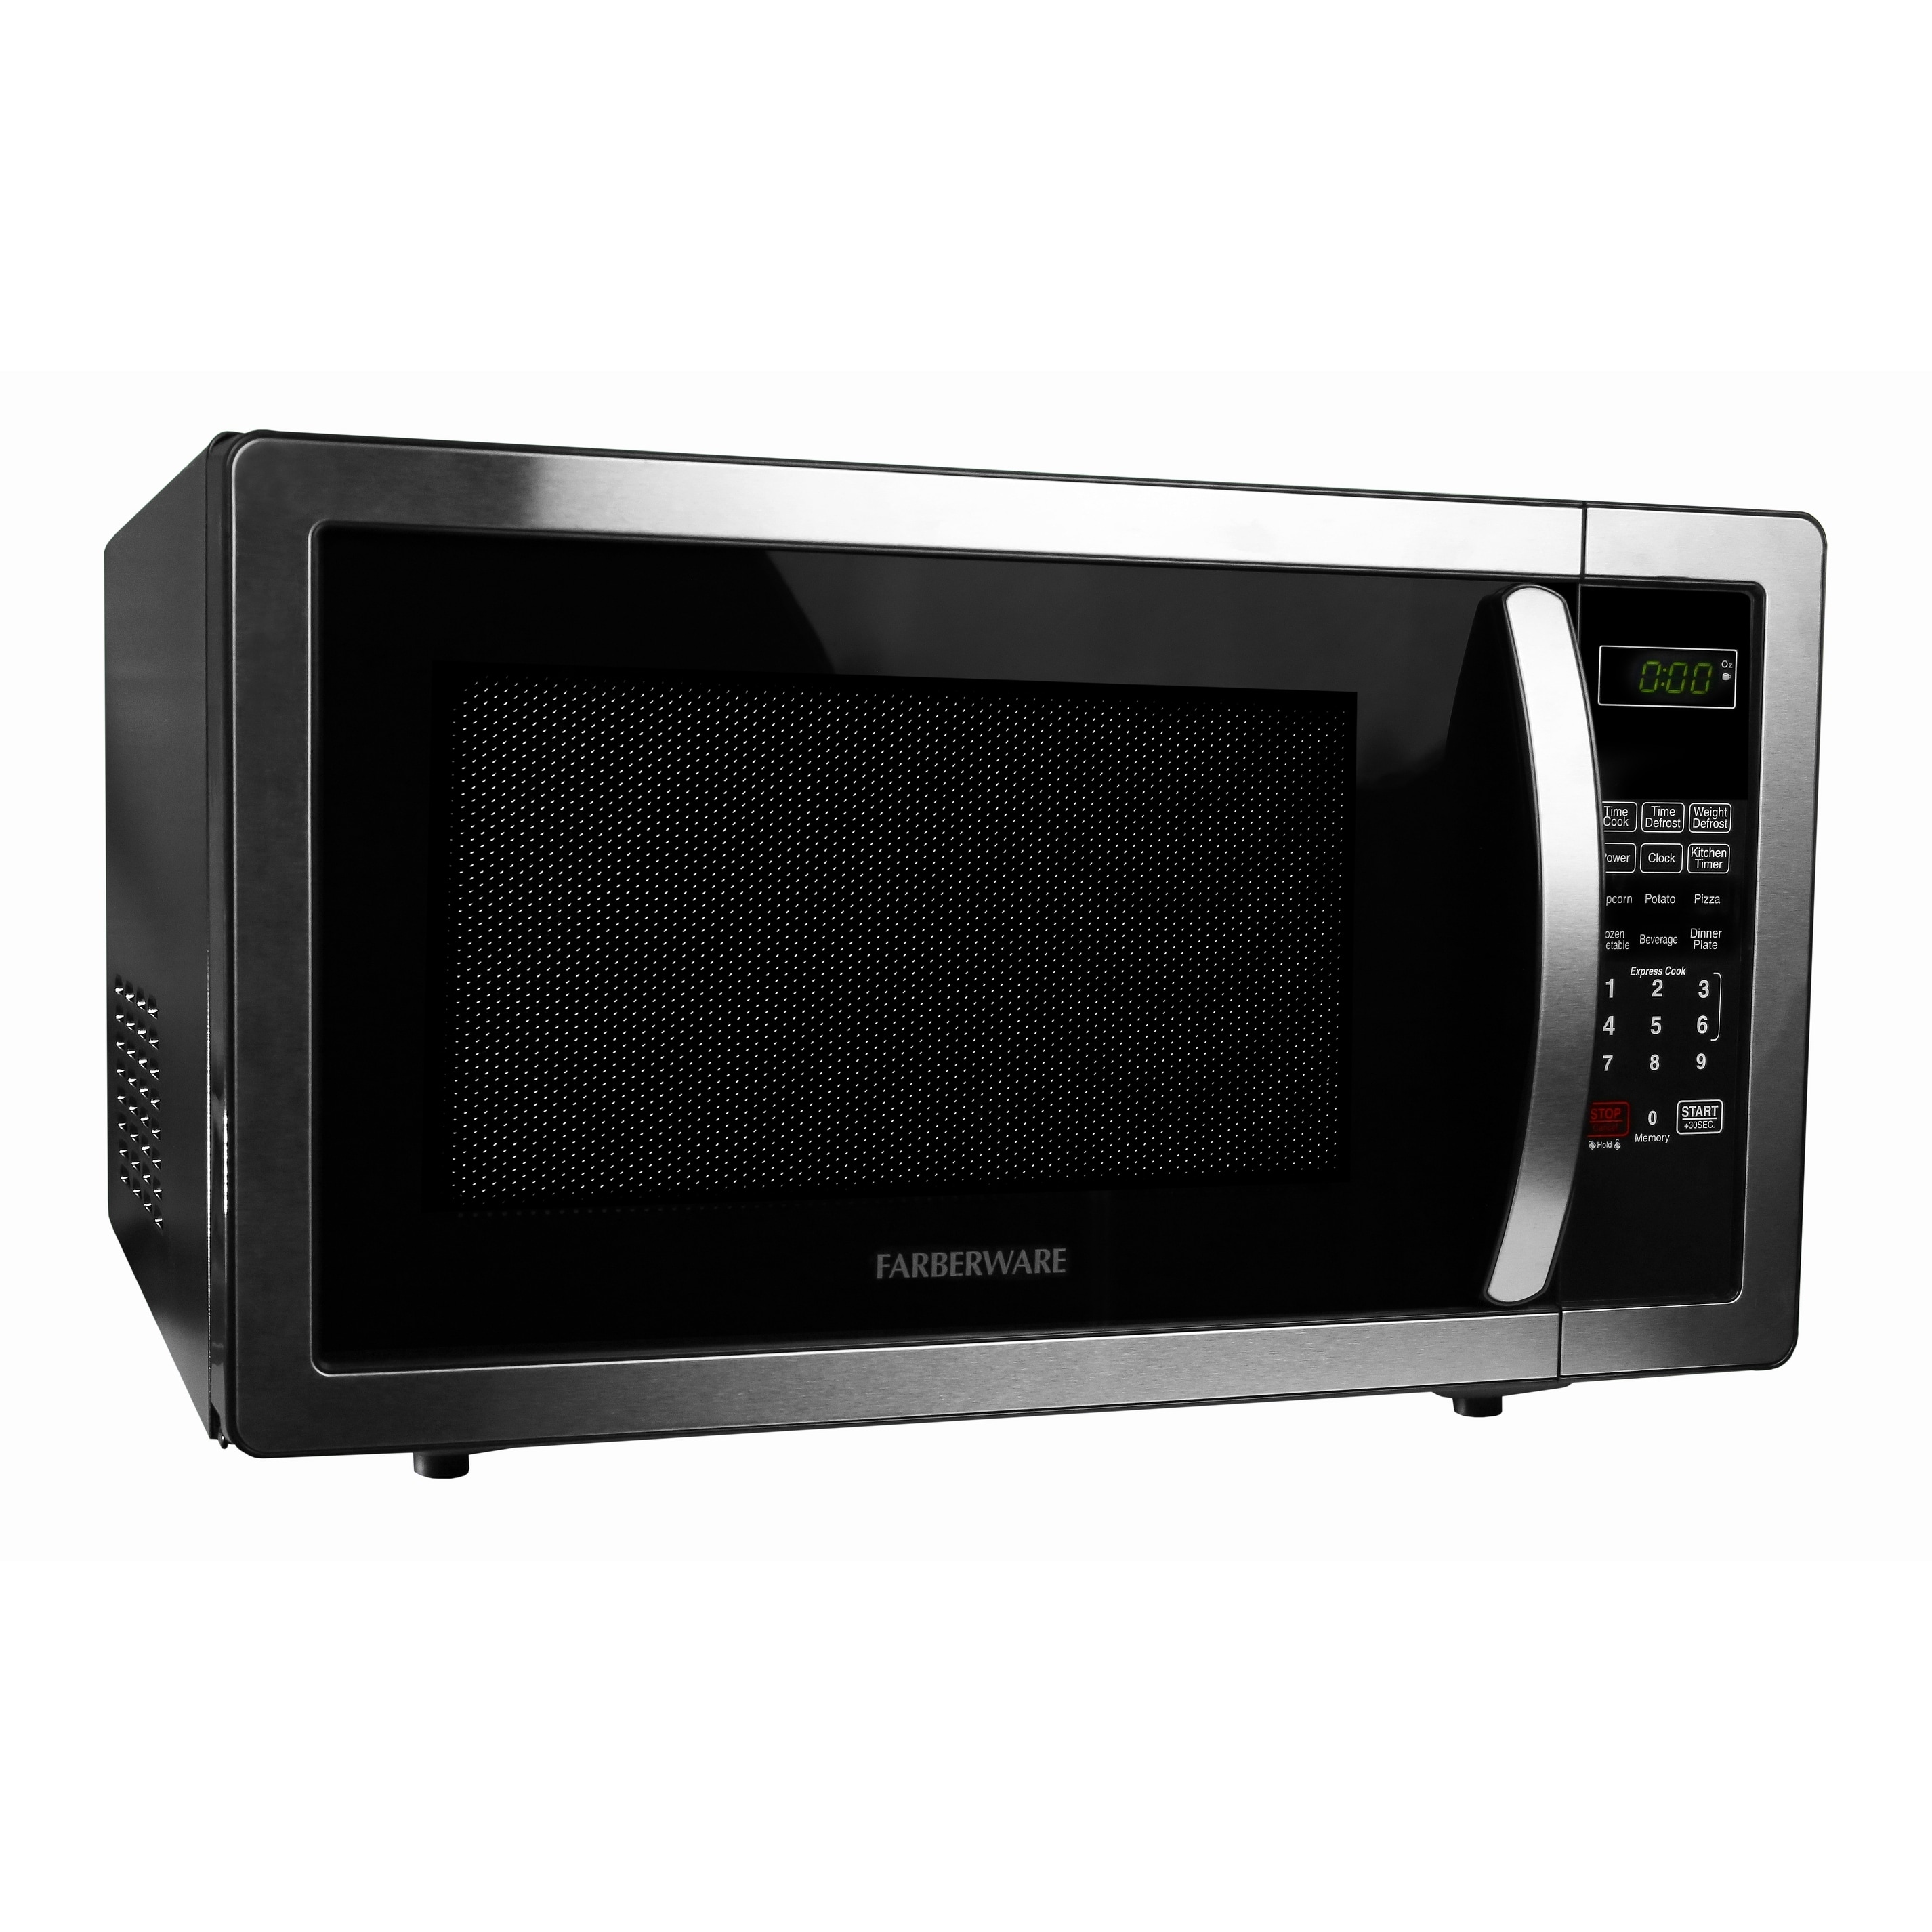 Oster 1.1 Cu. Ft. 1000 Watt Digital Microwave Oven - Black